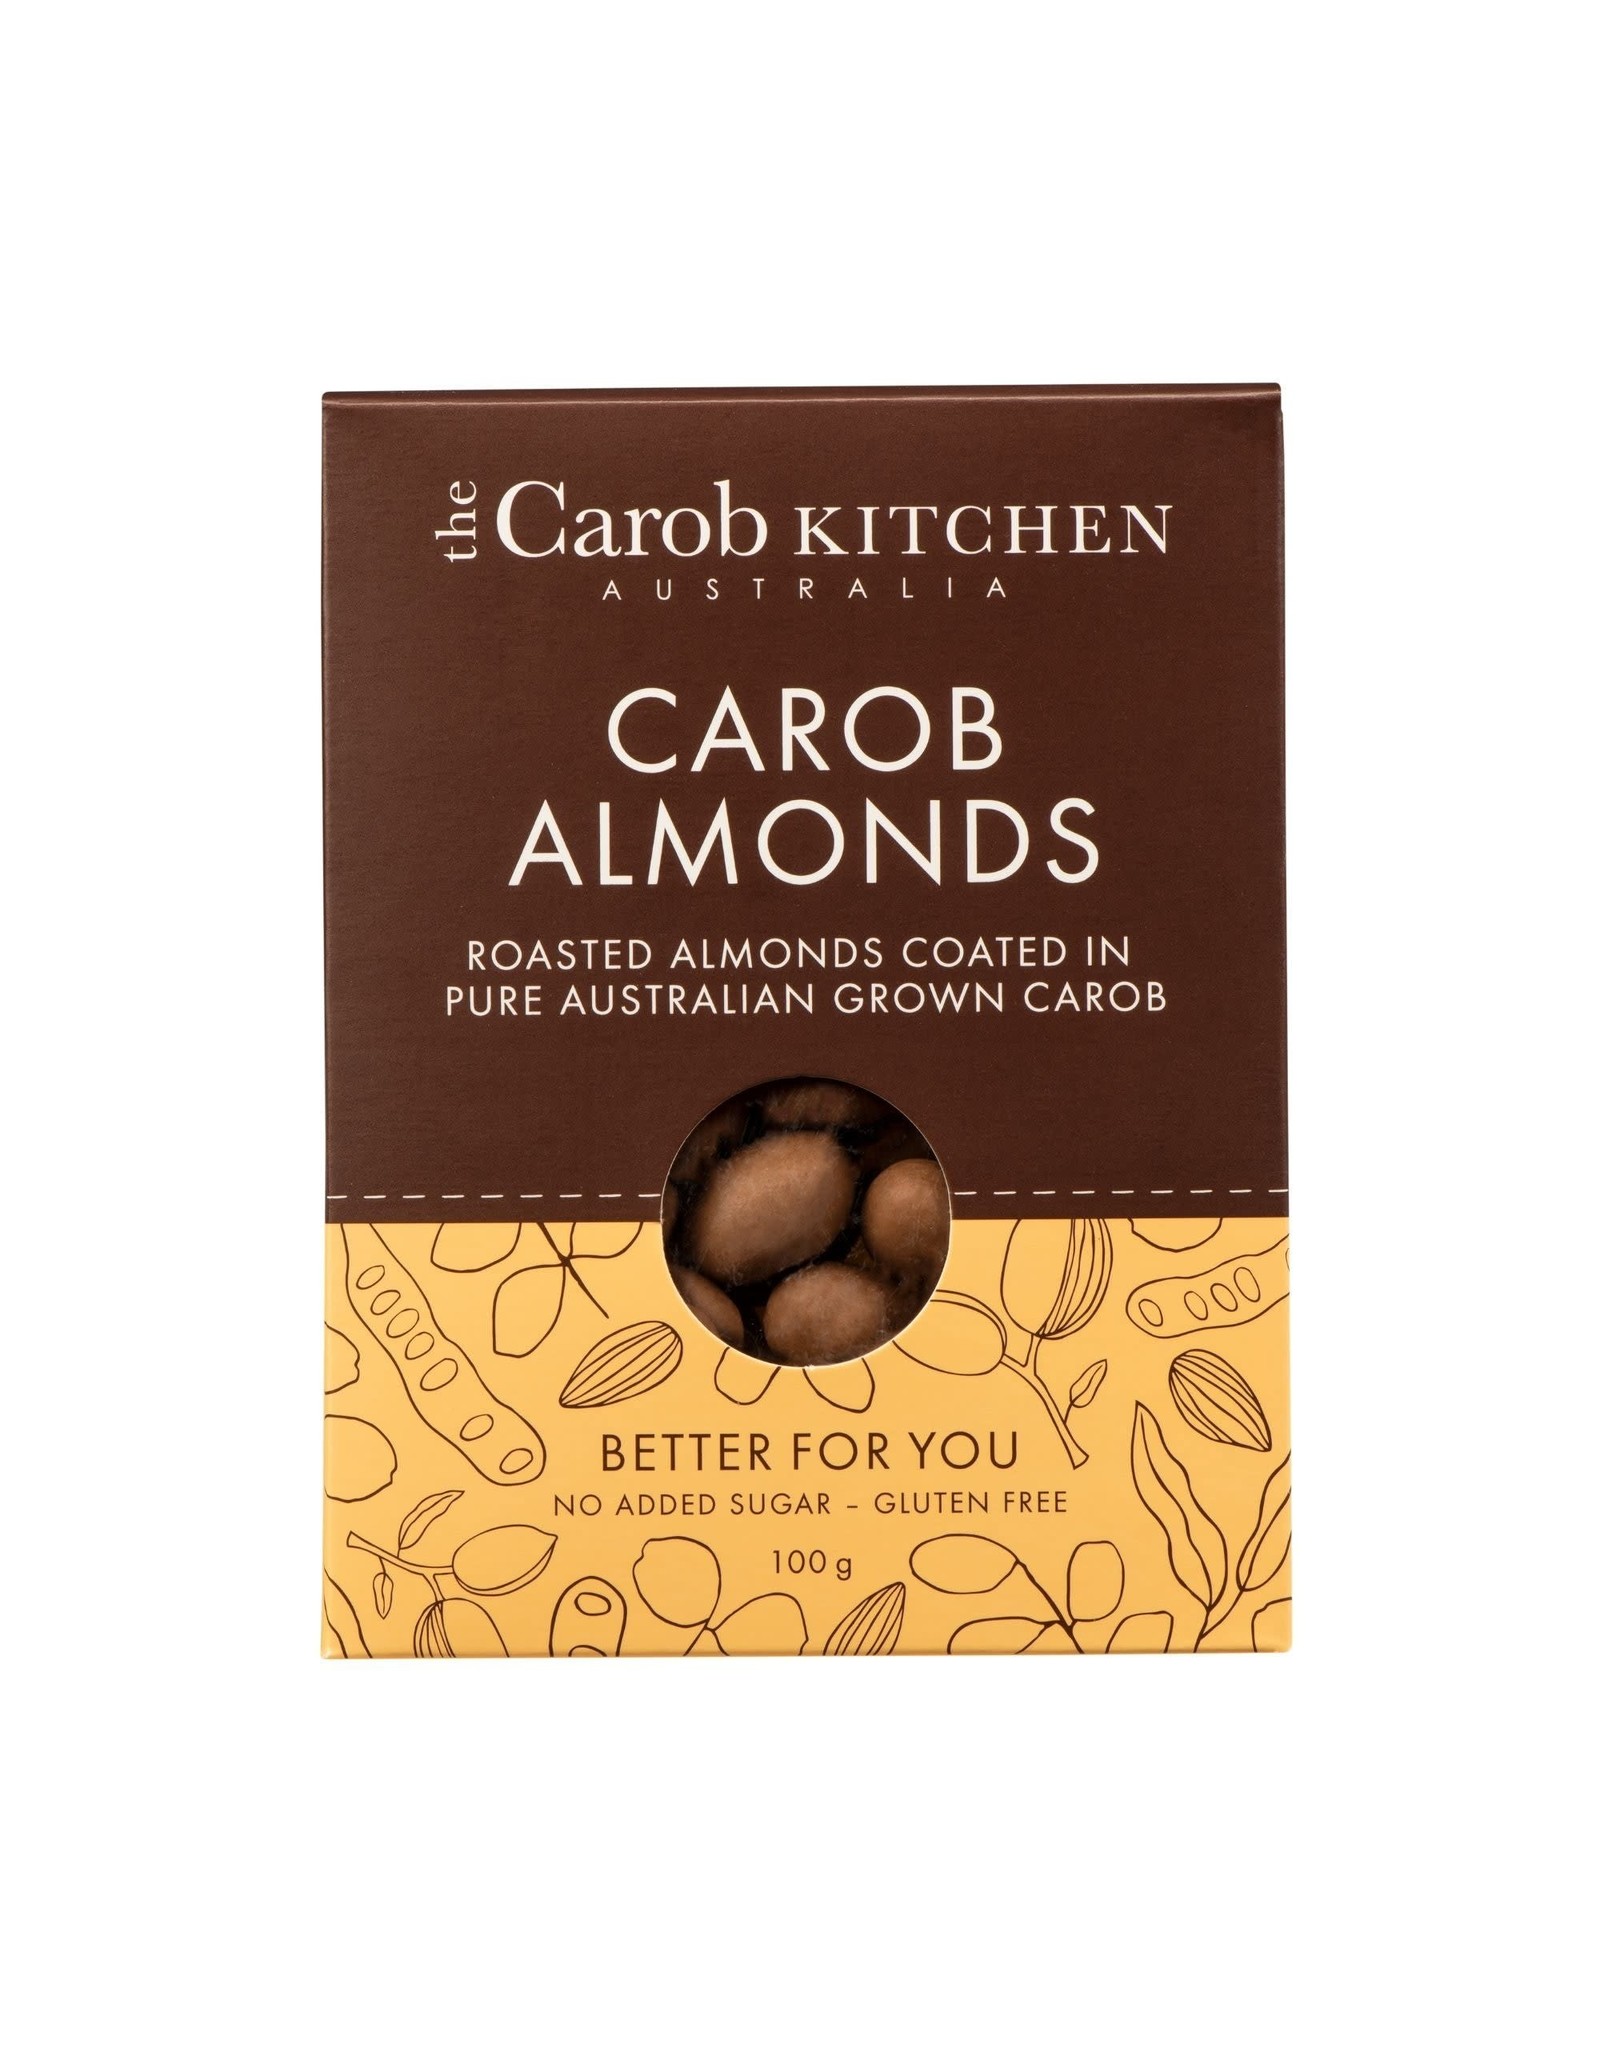 The Carob Kitchen Carob Almonds 100g